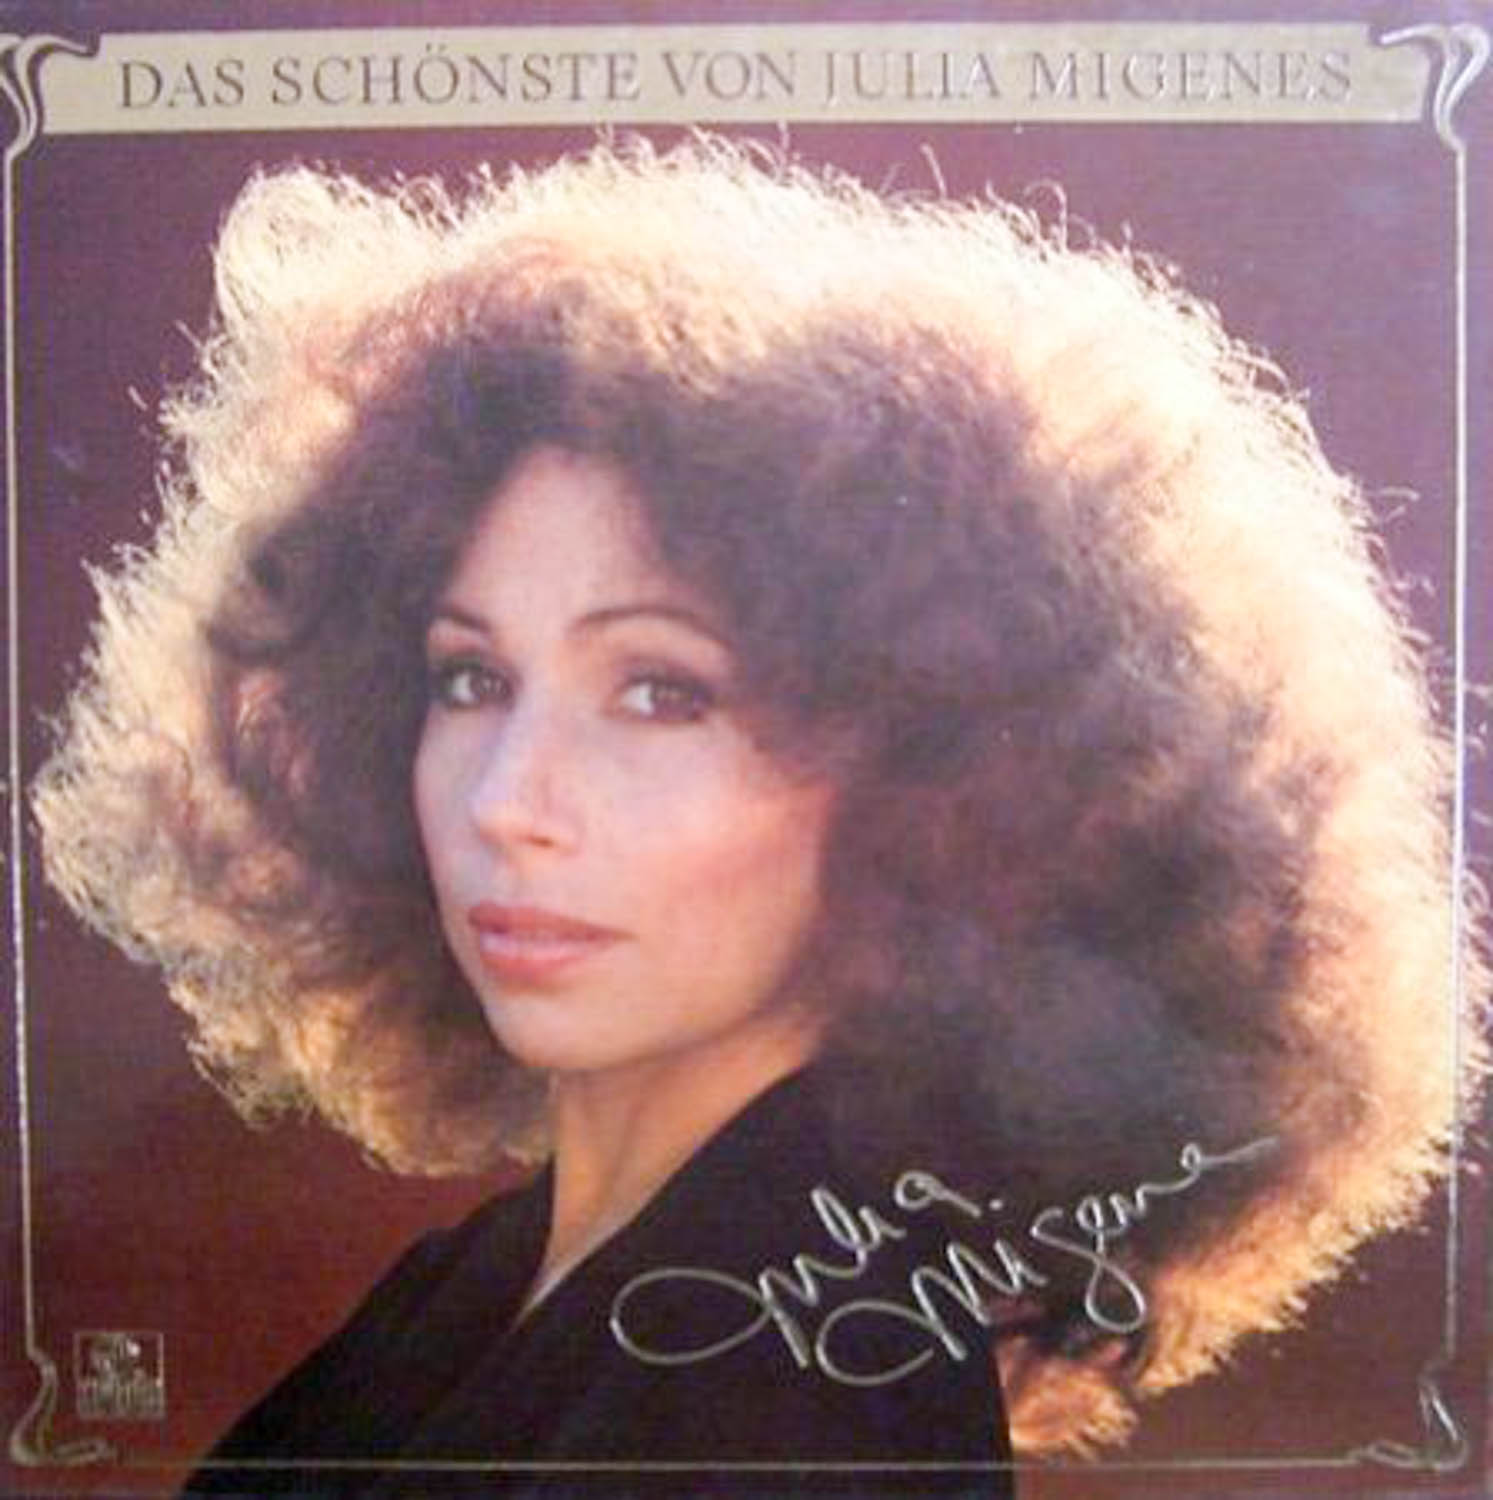 Julia Migenes  Das Schönste von Julia Migenes [Doppel-LP Box] (301771-420)  *LP 12'' (Vinyl)*. 